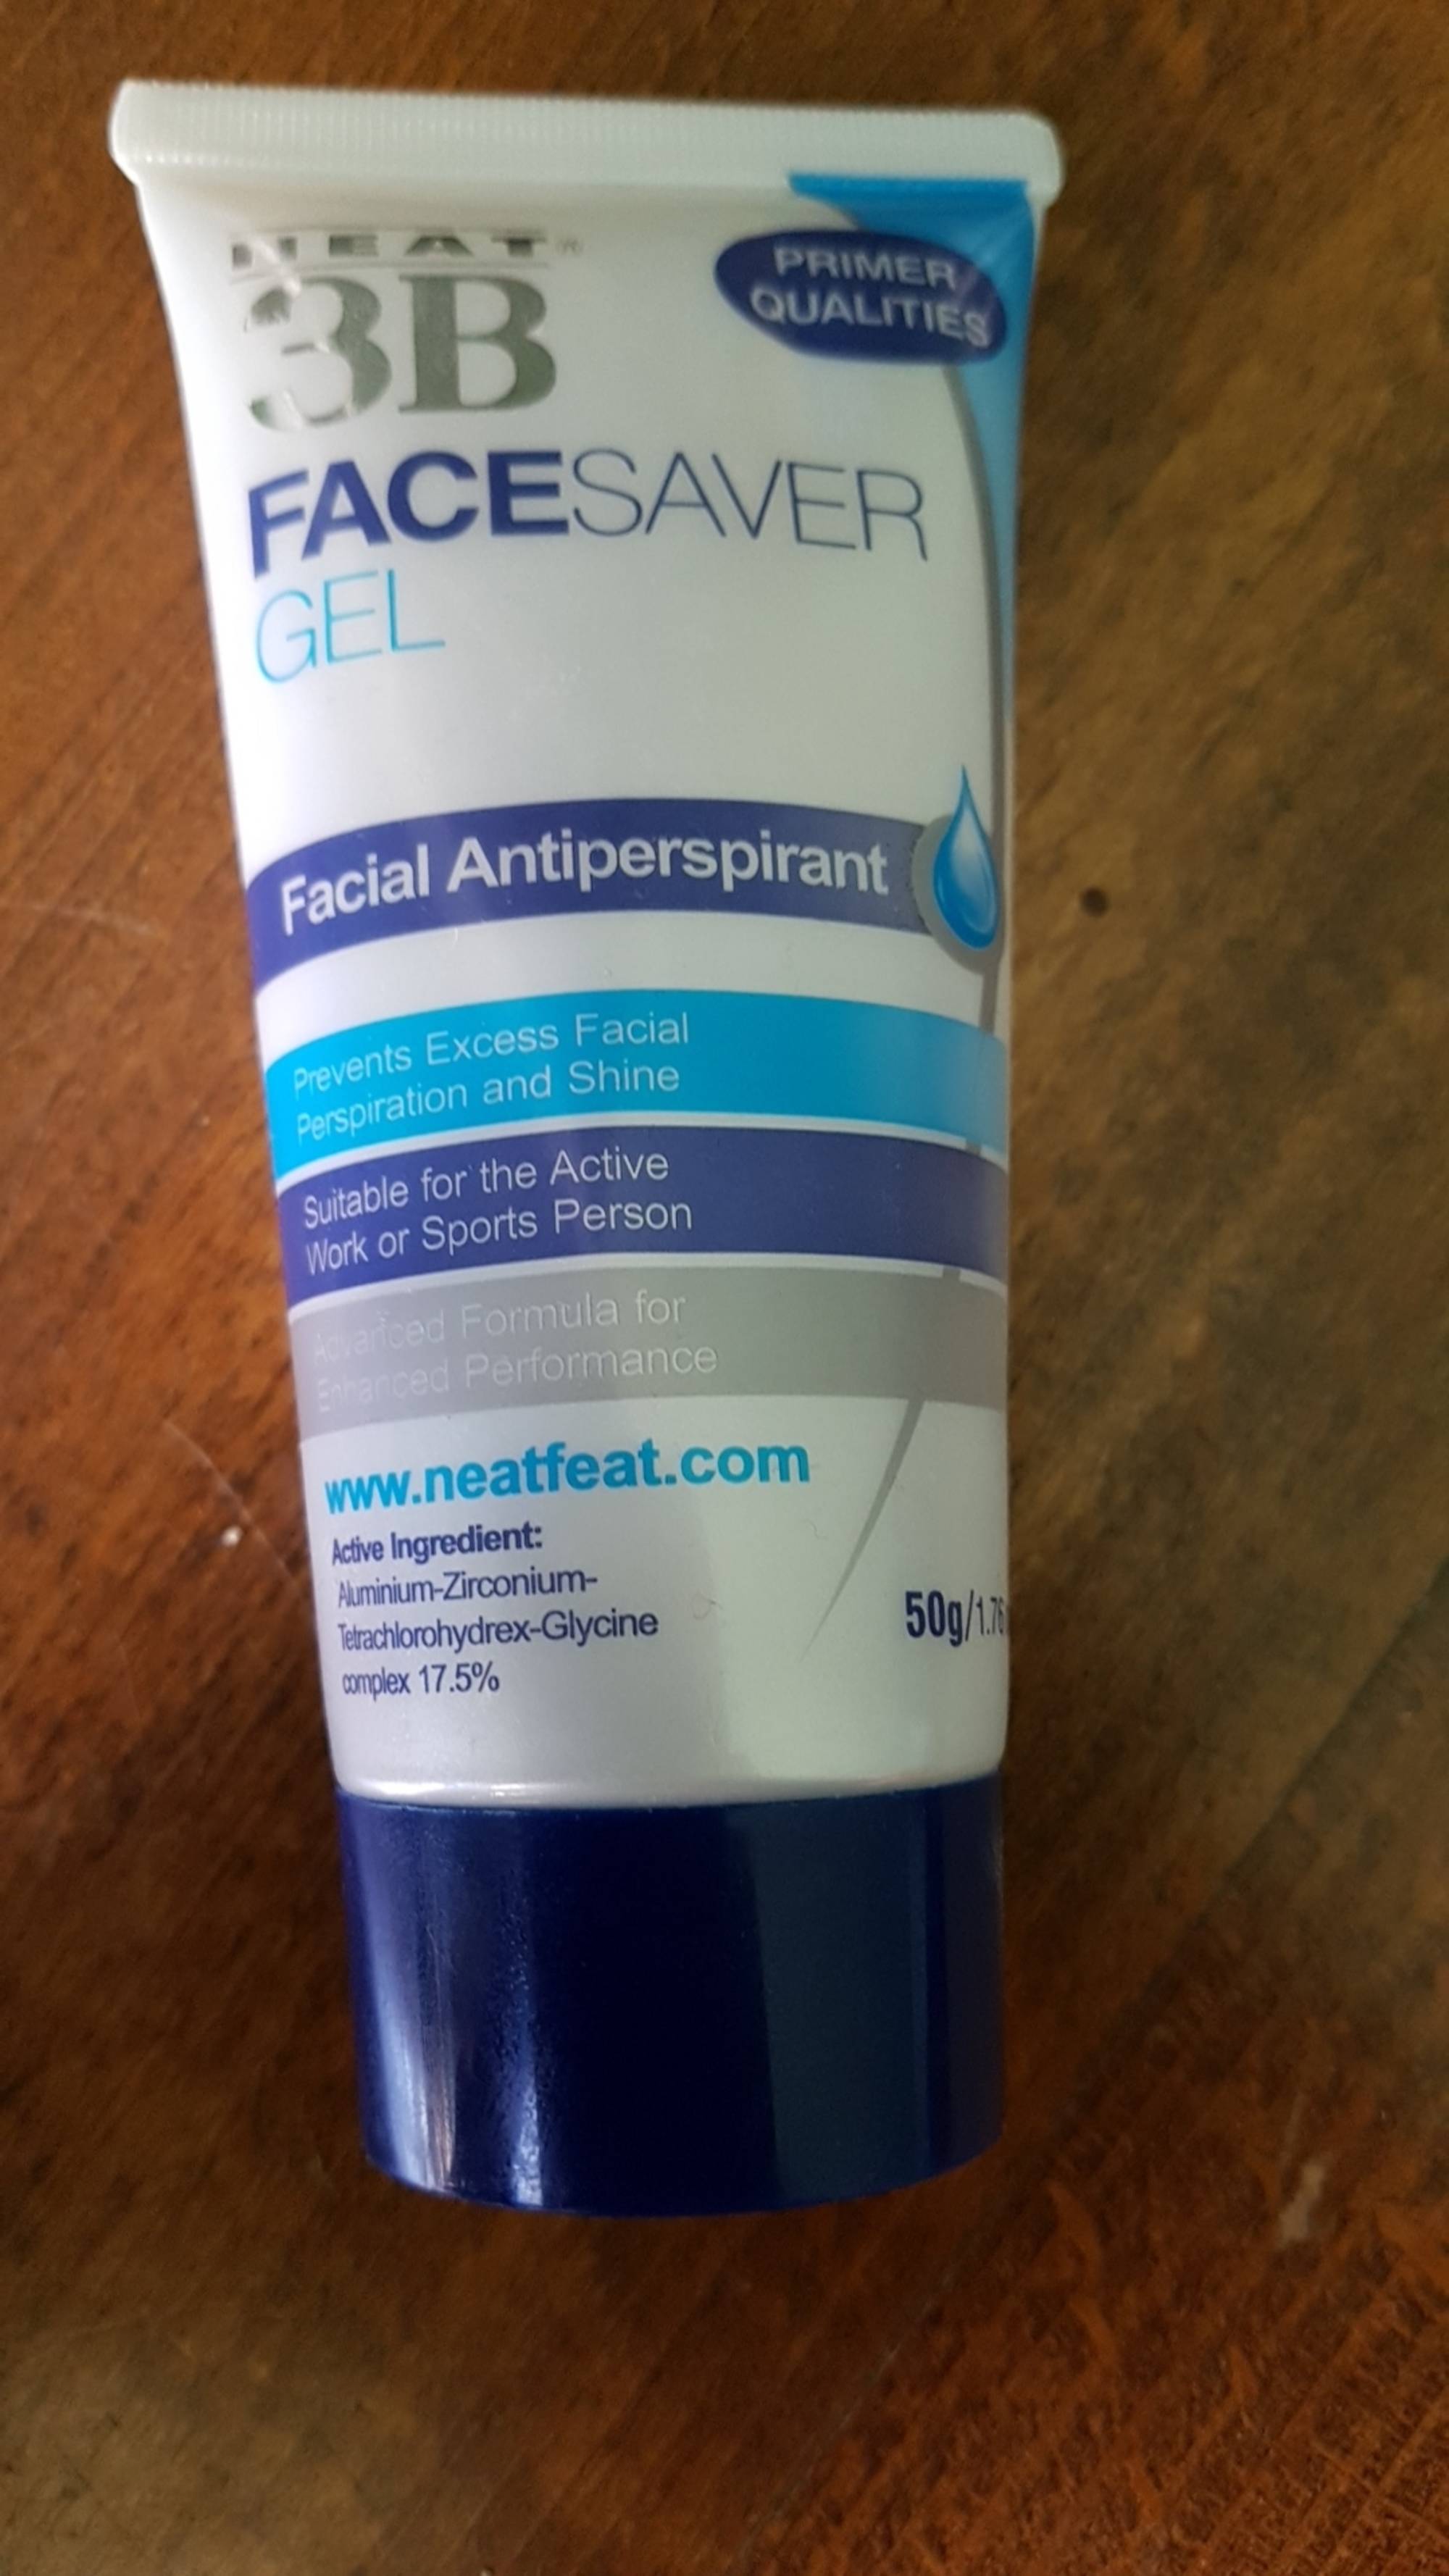 NEAT - 3B Face Saver Gel - Facial antiperspirant